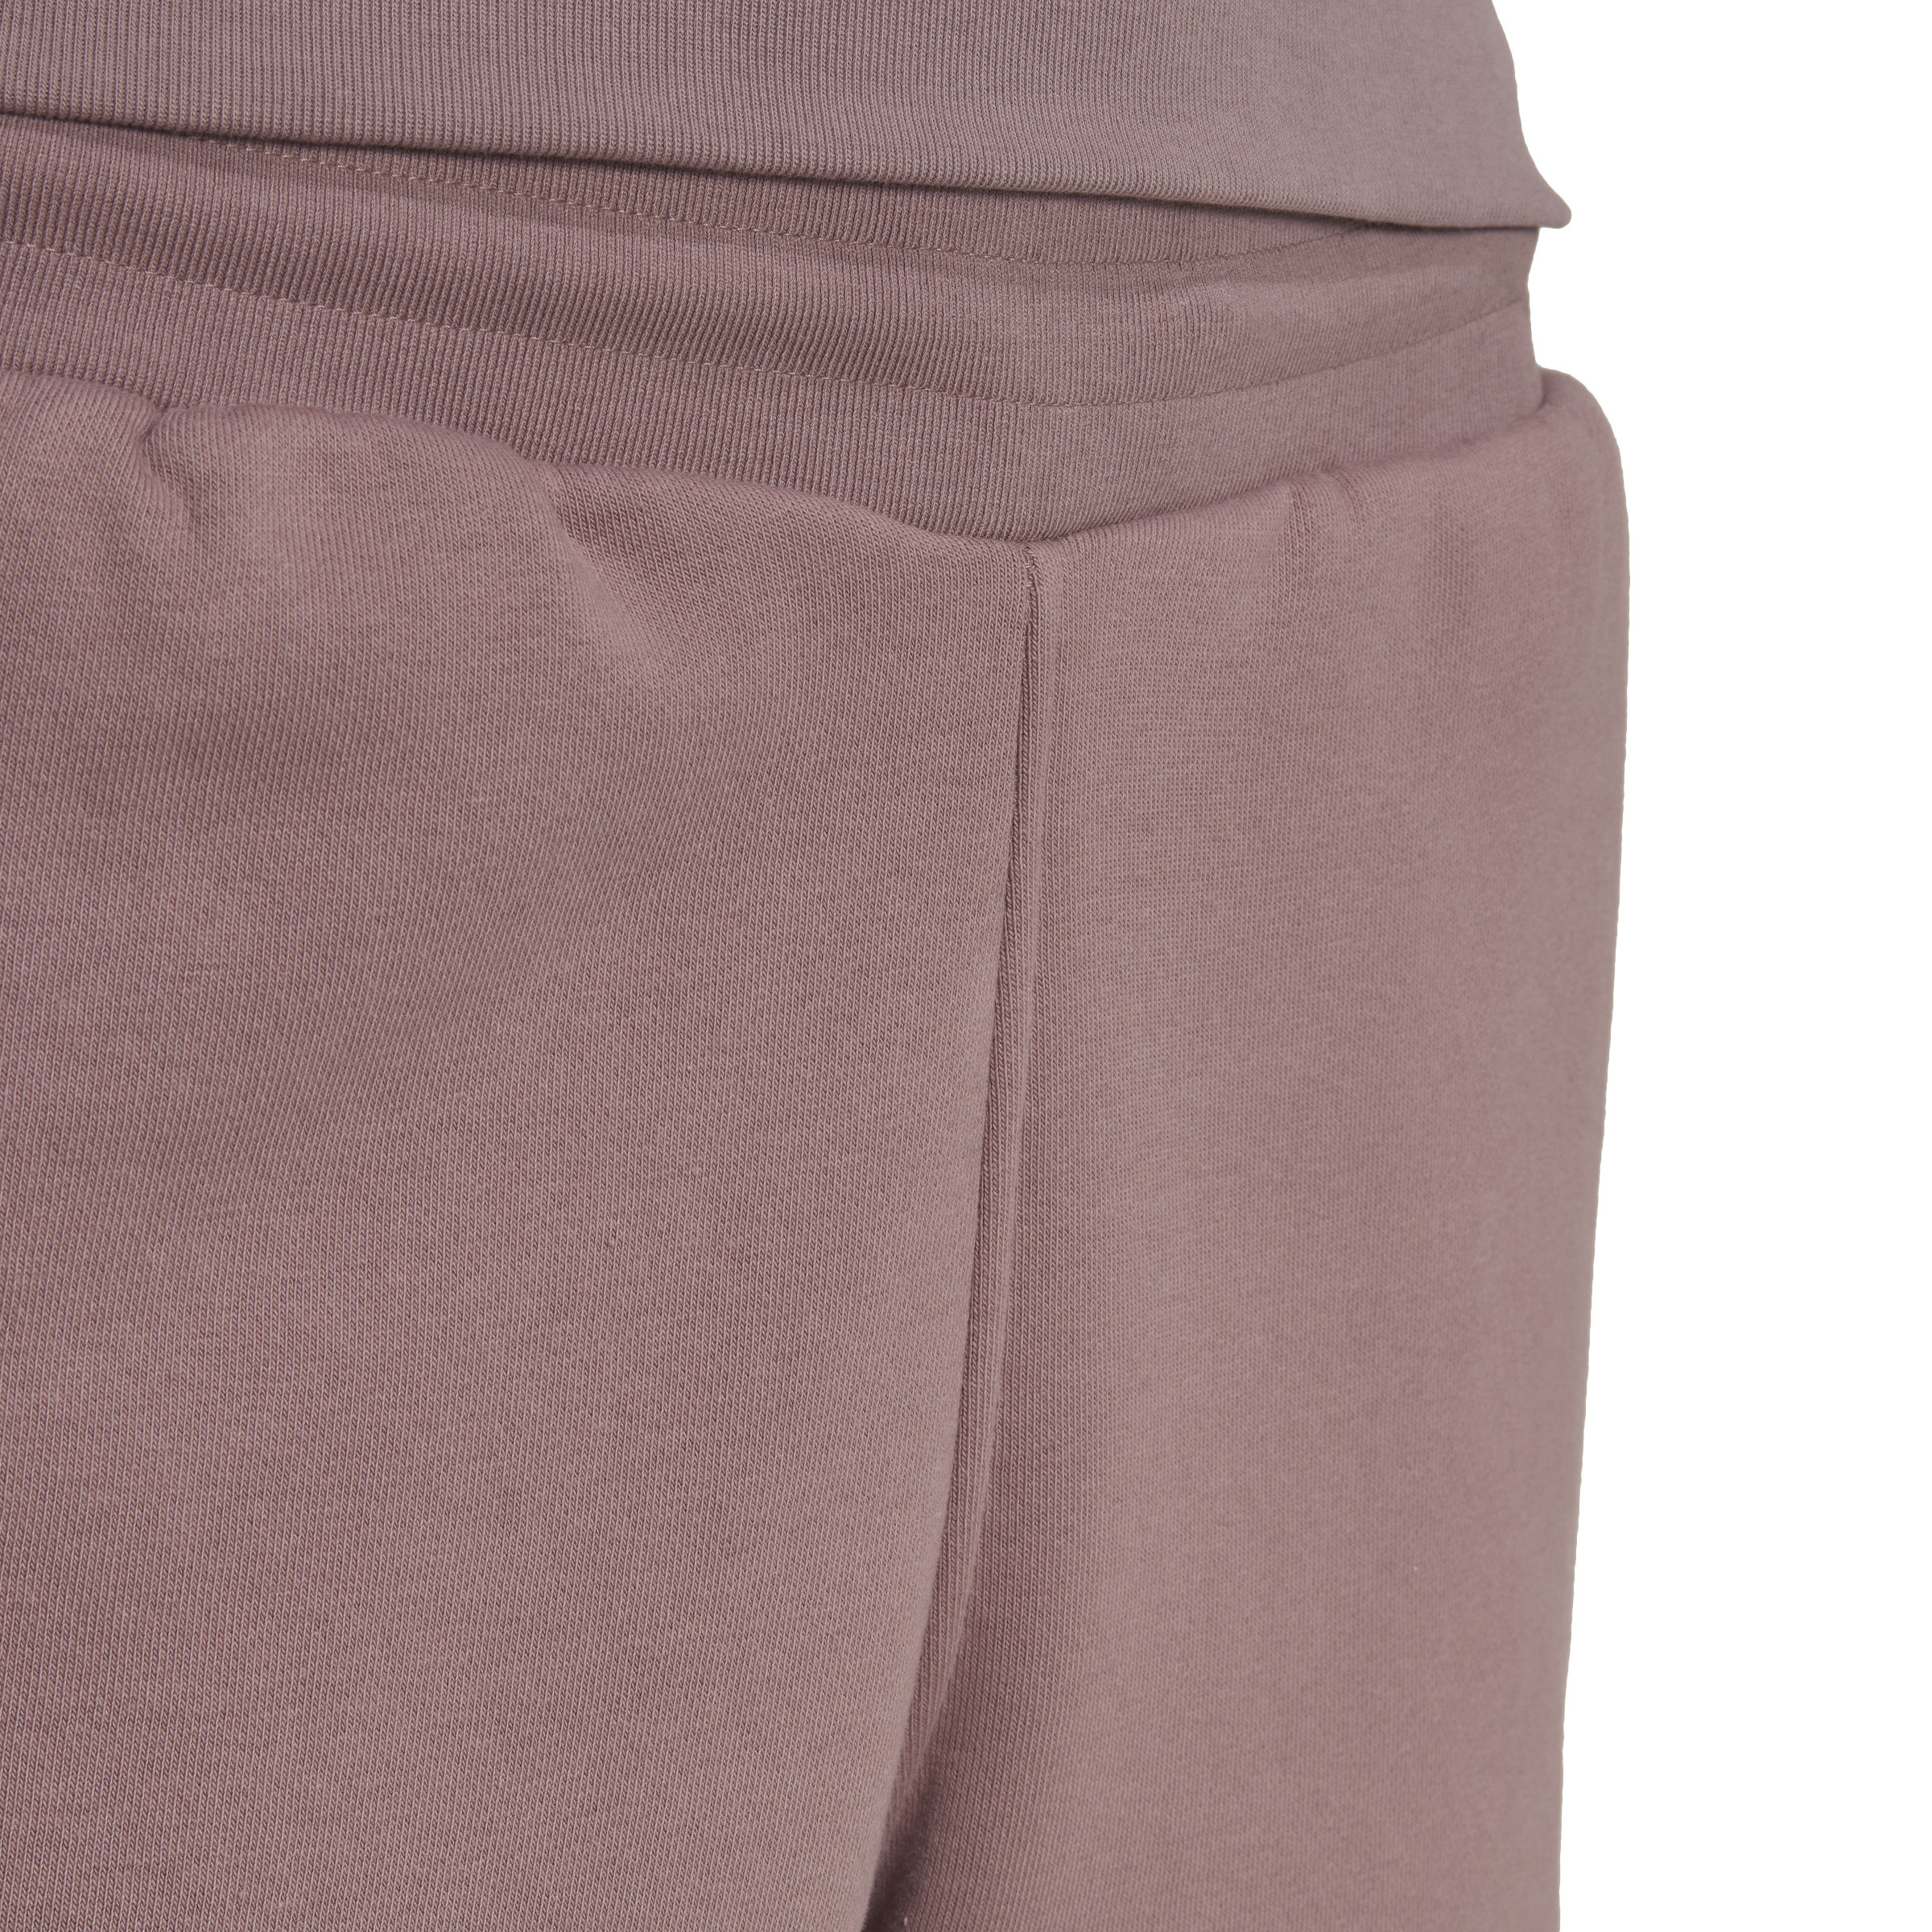 Adidas - Adicolor Essentials Trefoil Pants, Antique Pink, large image number 5